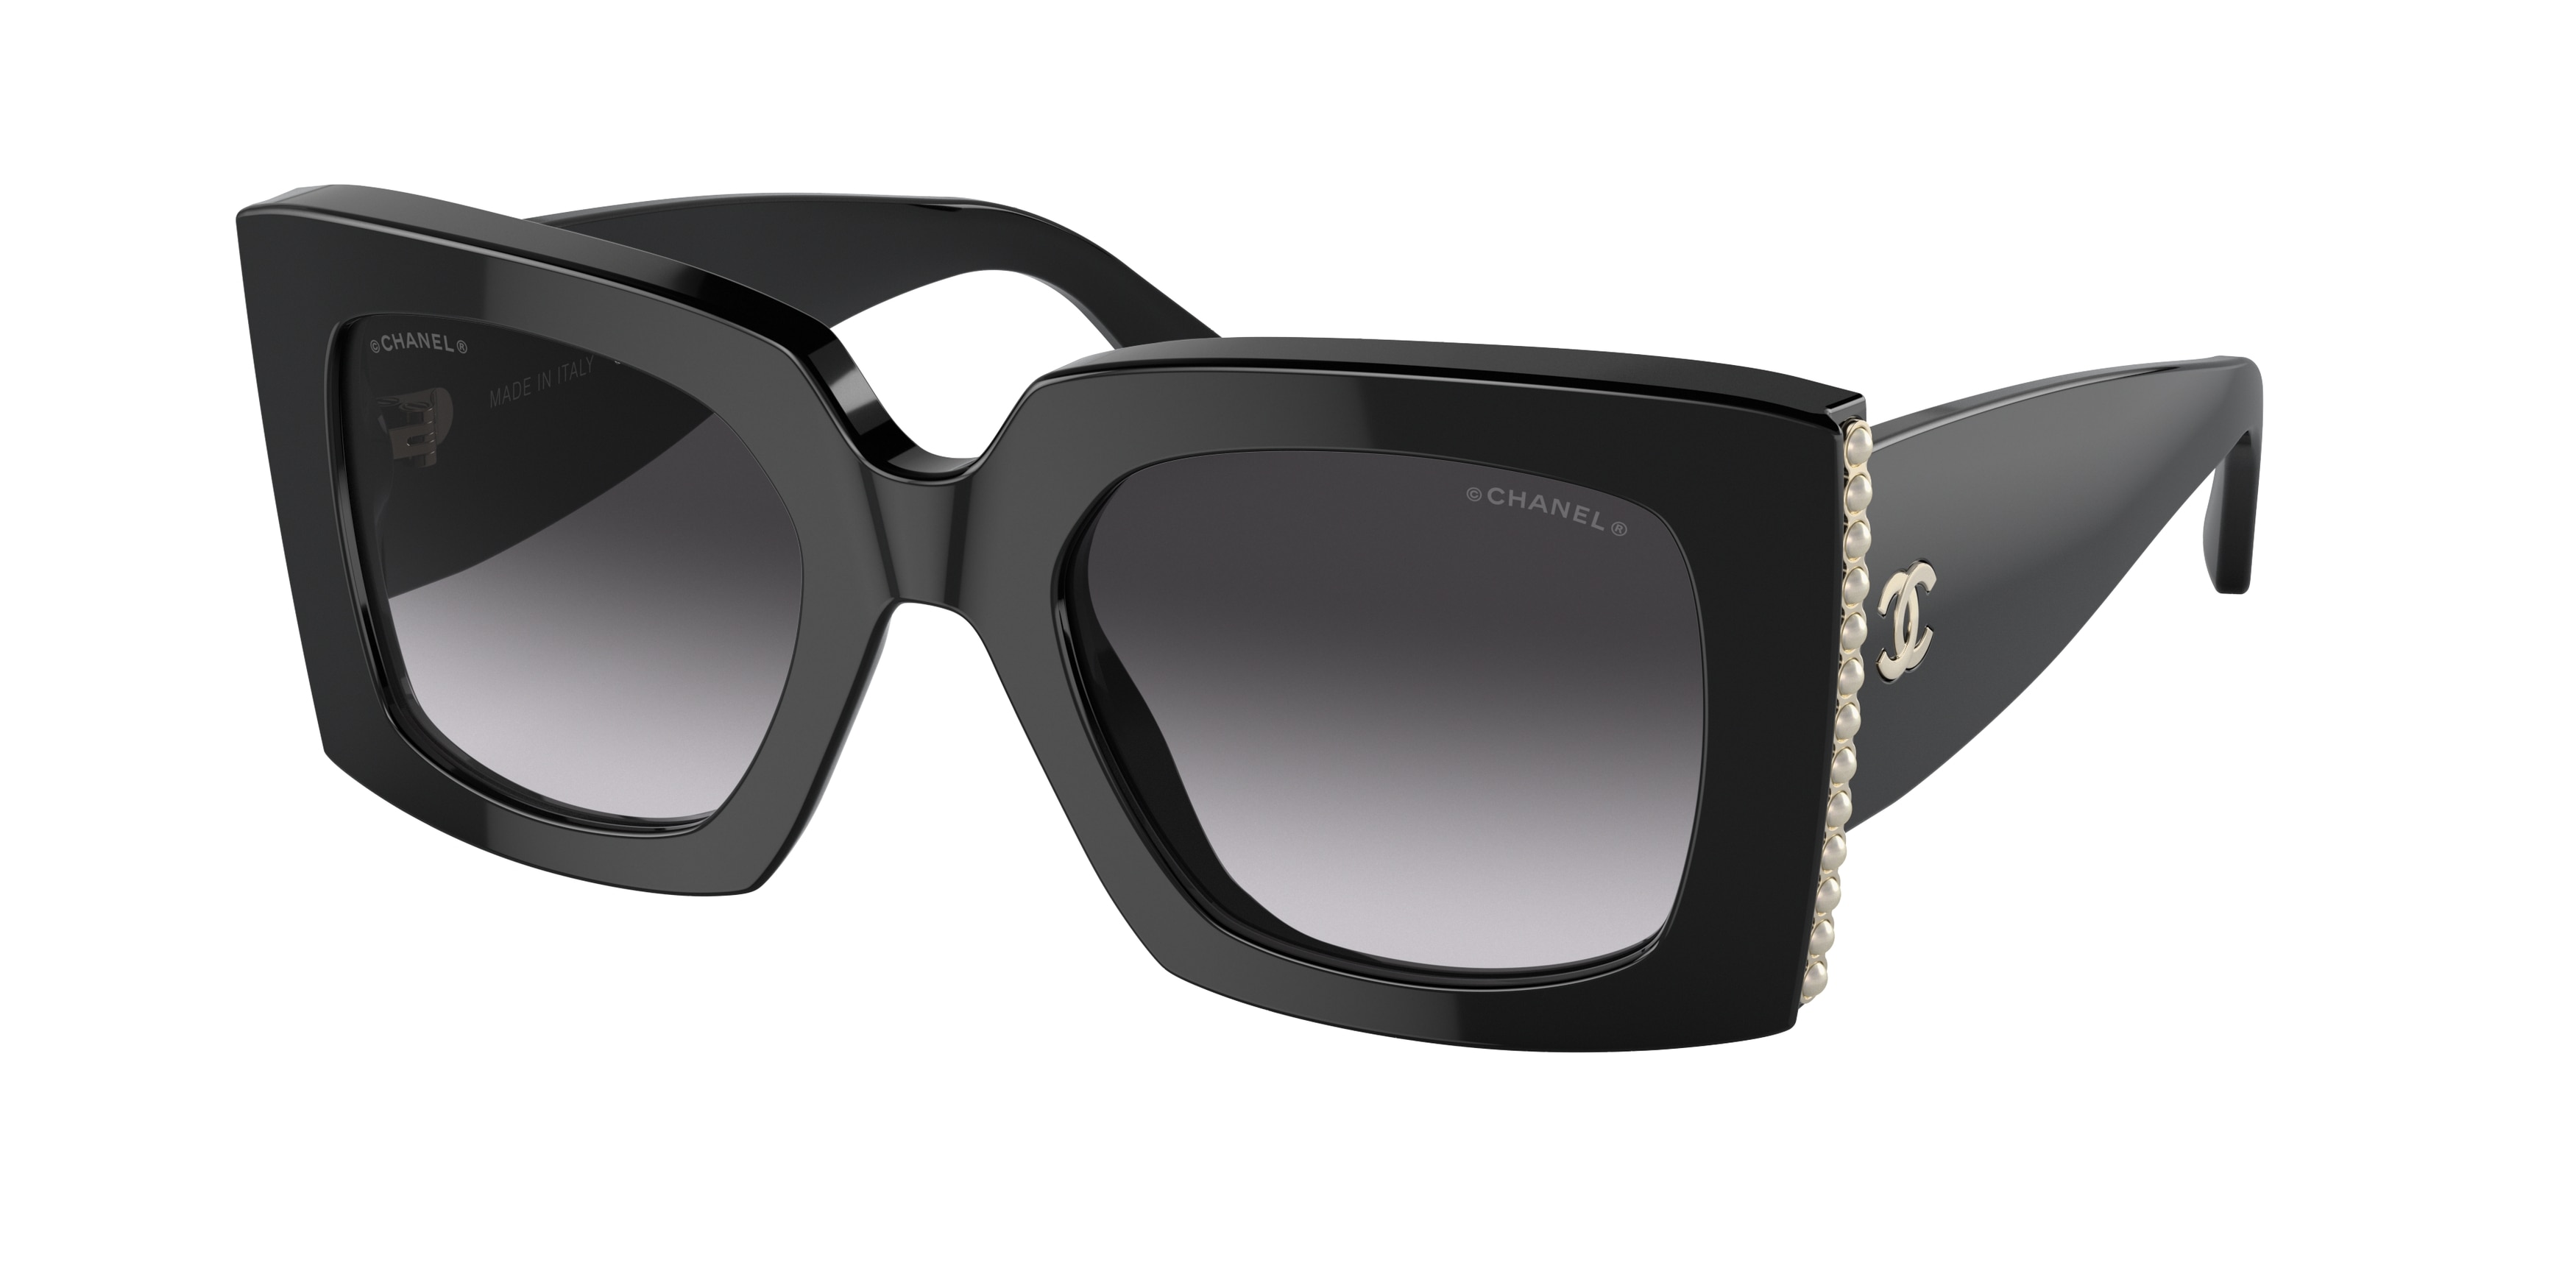 Chanel Rectangle Sunglasses - Acetate and Metal, Black - Polarized - UV Protected - Women's Sunglasses - 9124 C622/S6